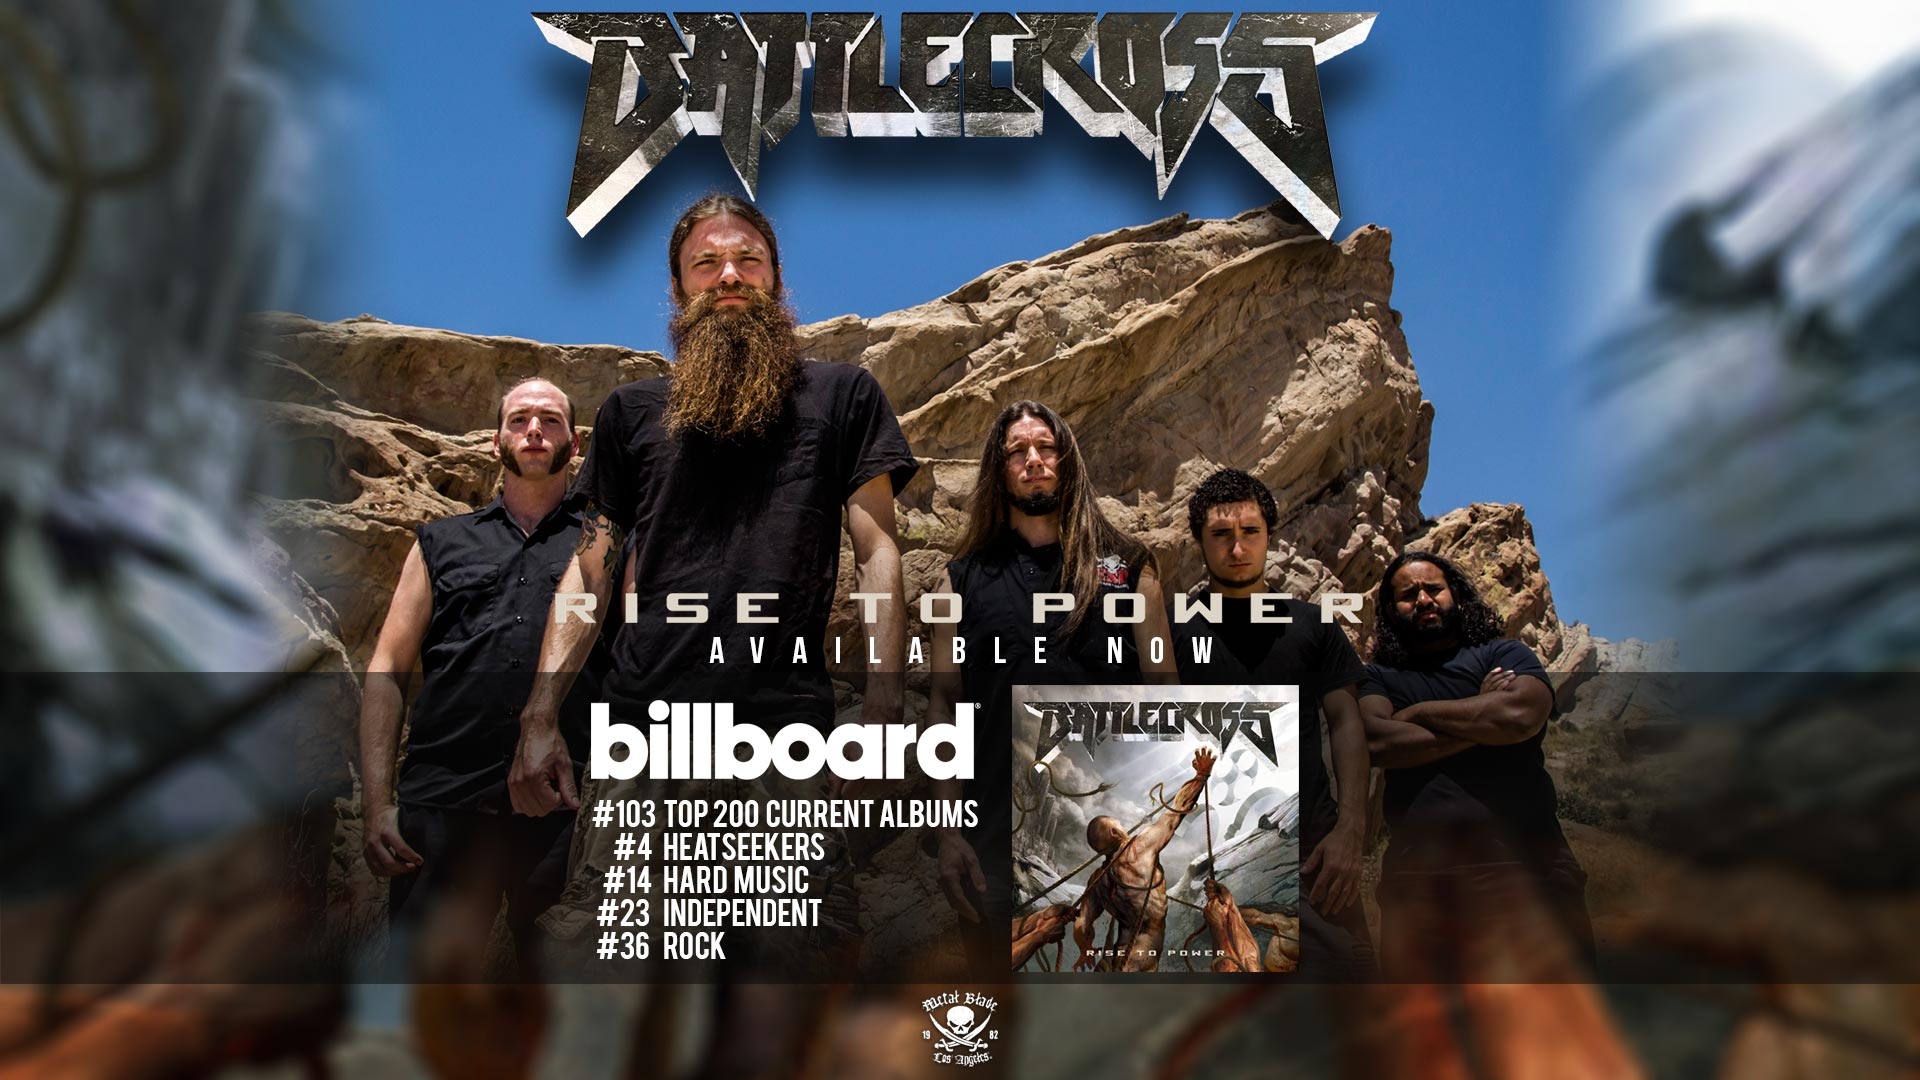 BATTLECROSS Enter Billboard Charts With Third Album  "Rise To Power"